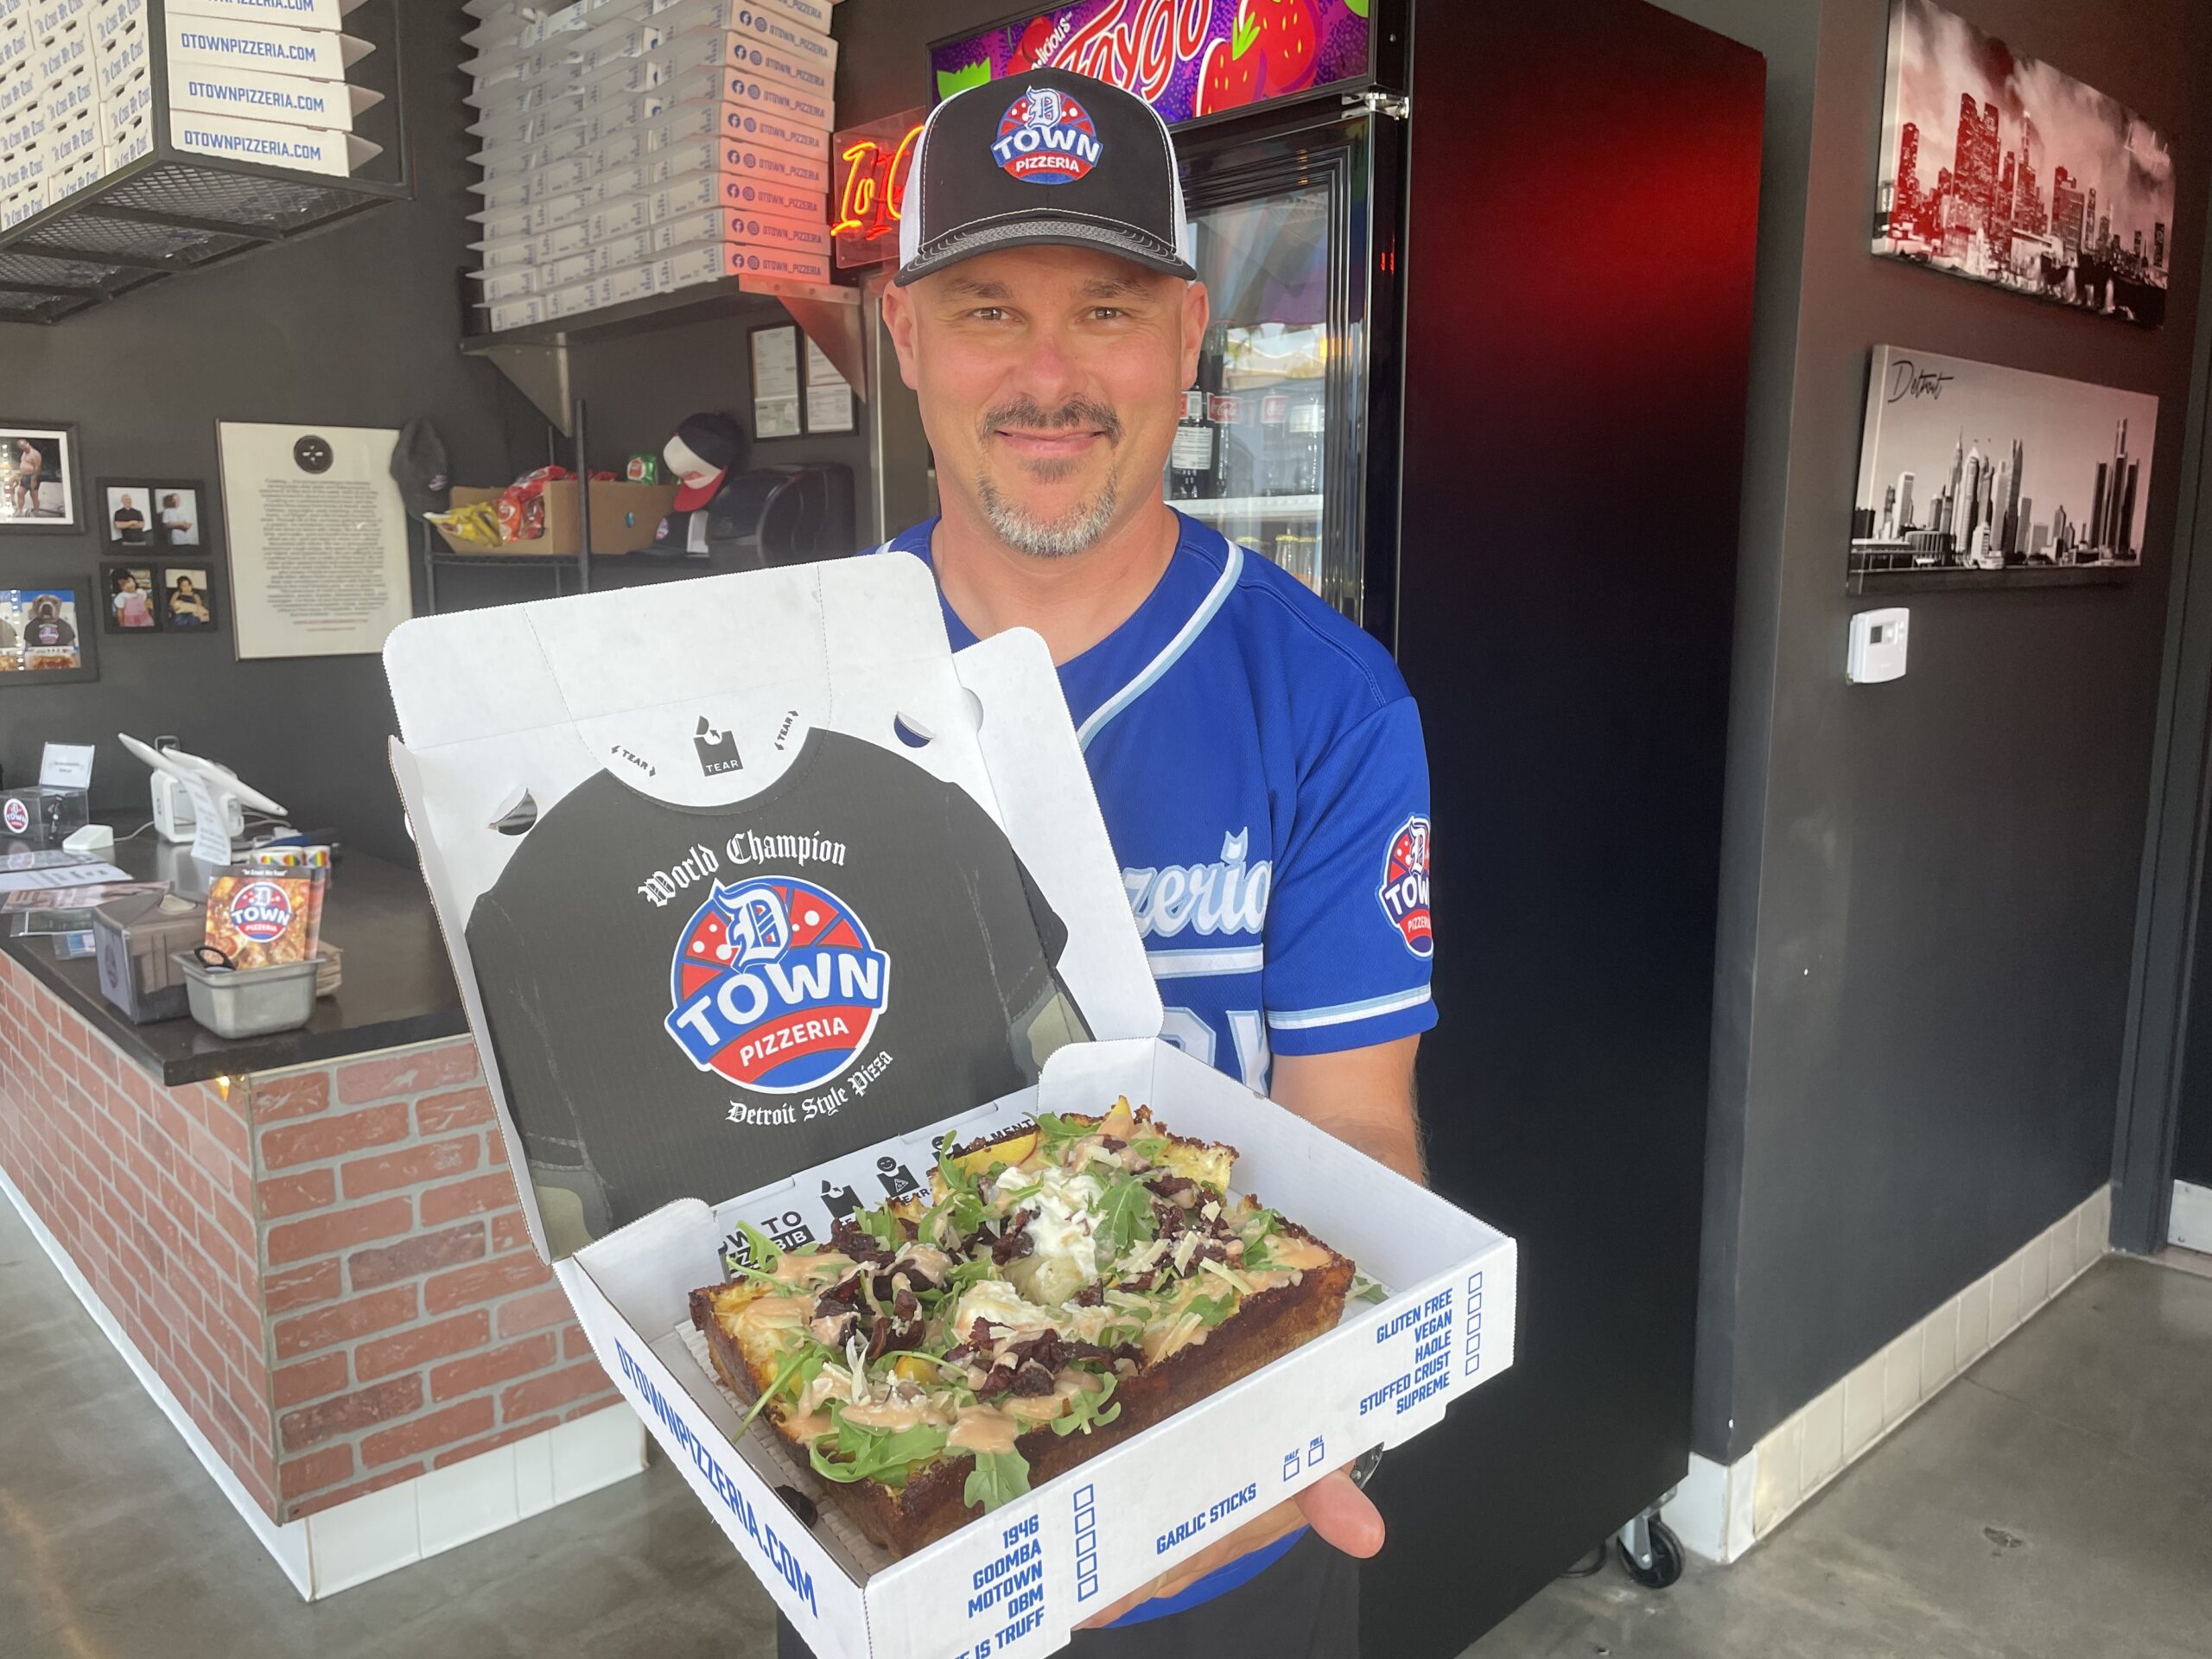 Ryan Ososky – Dtown Pizzeria (L.A.)